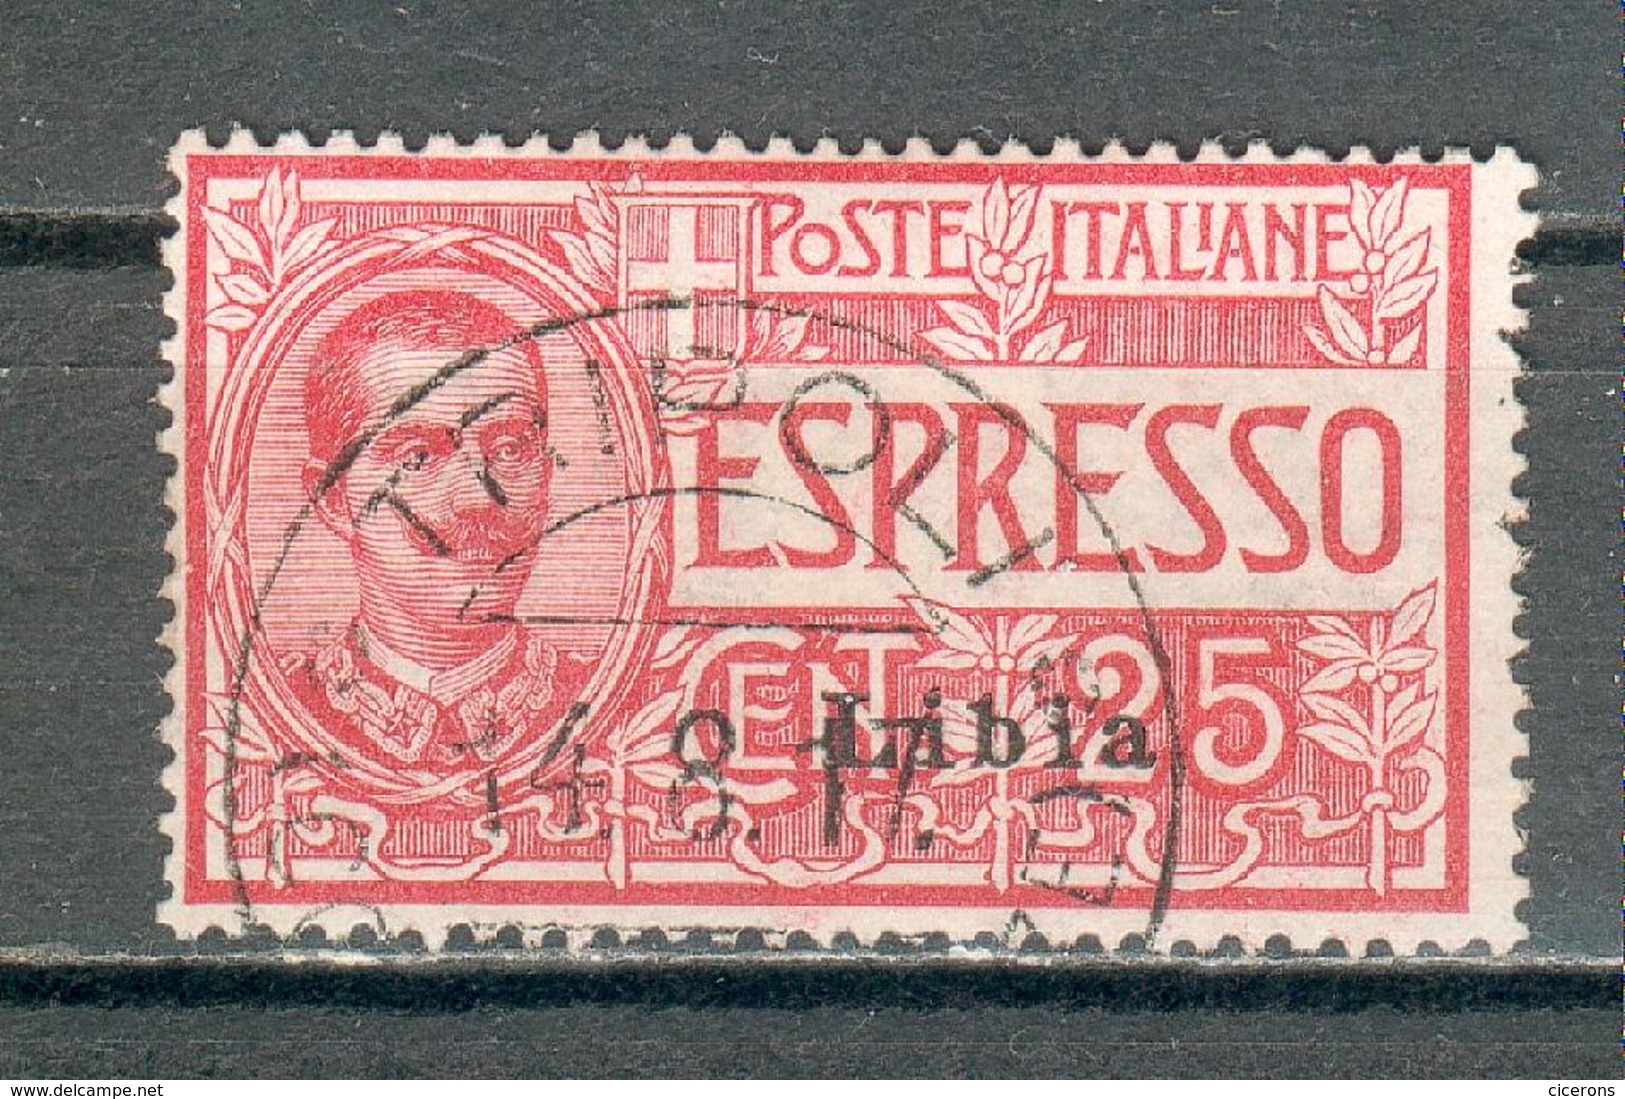 LIBYE ; Colonie Italienne  ; Exprès ; 1915 ; Y&T N° 1 ; Oblitéré - Libya